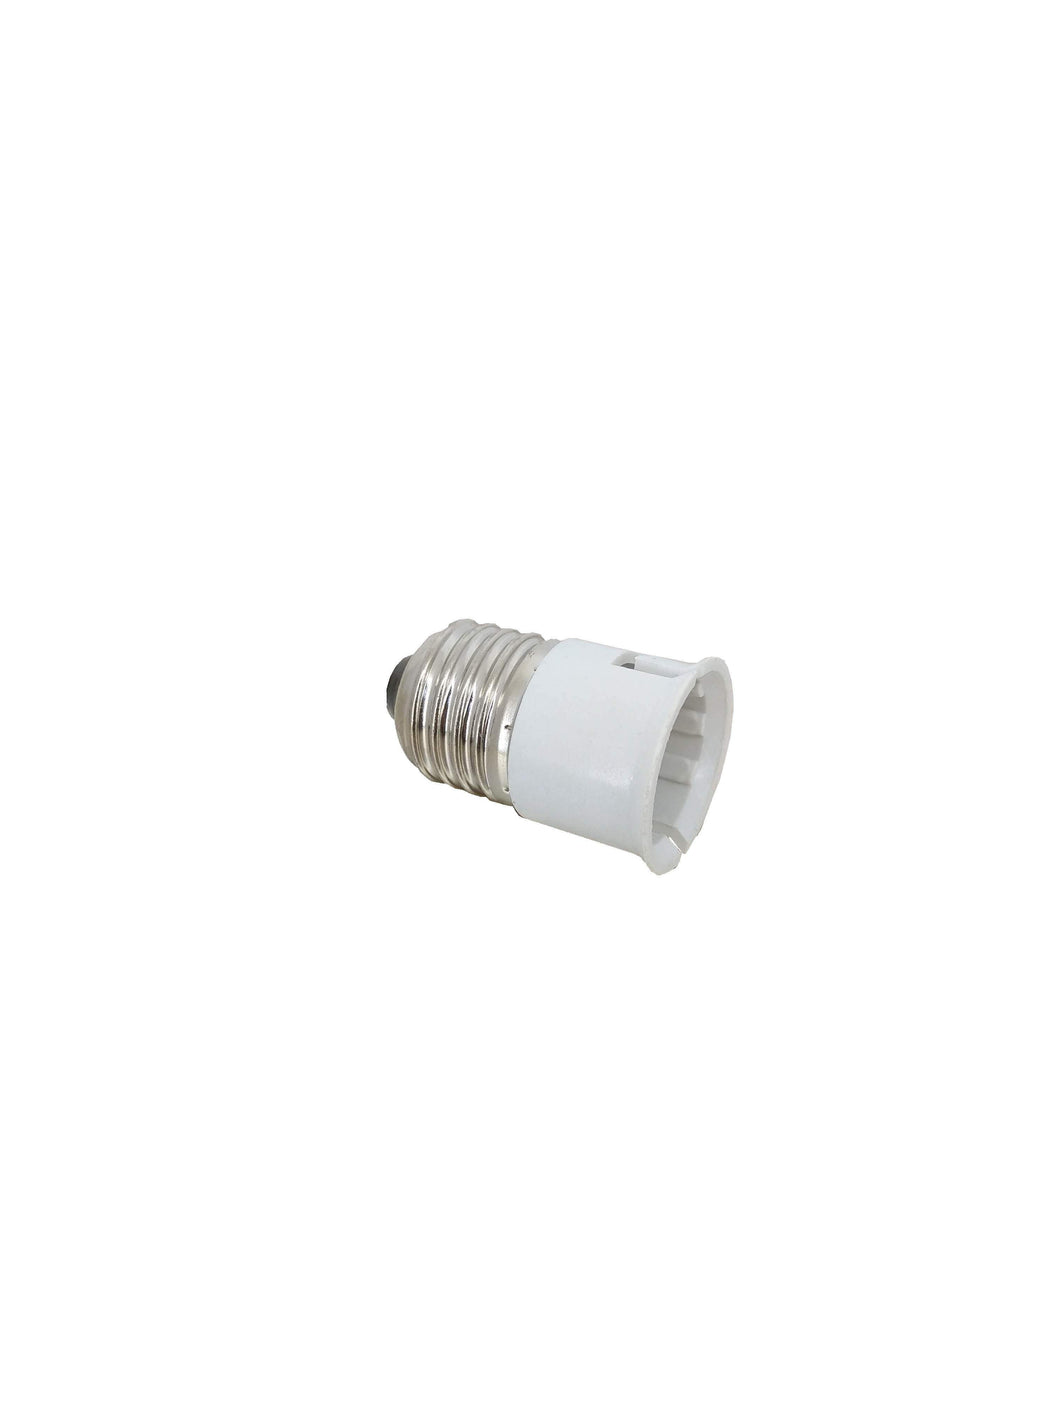 E27 Male to B22 Female Light Bulb Lamp Screw Socket Converter Adapter Holder - Sun Cheong Computer Company Limited